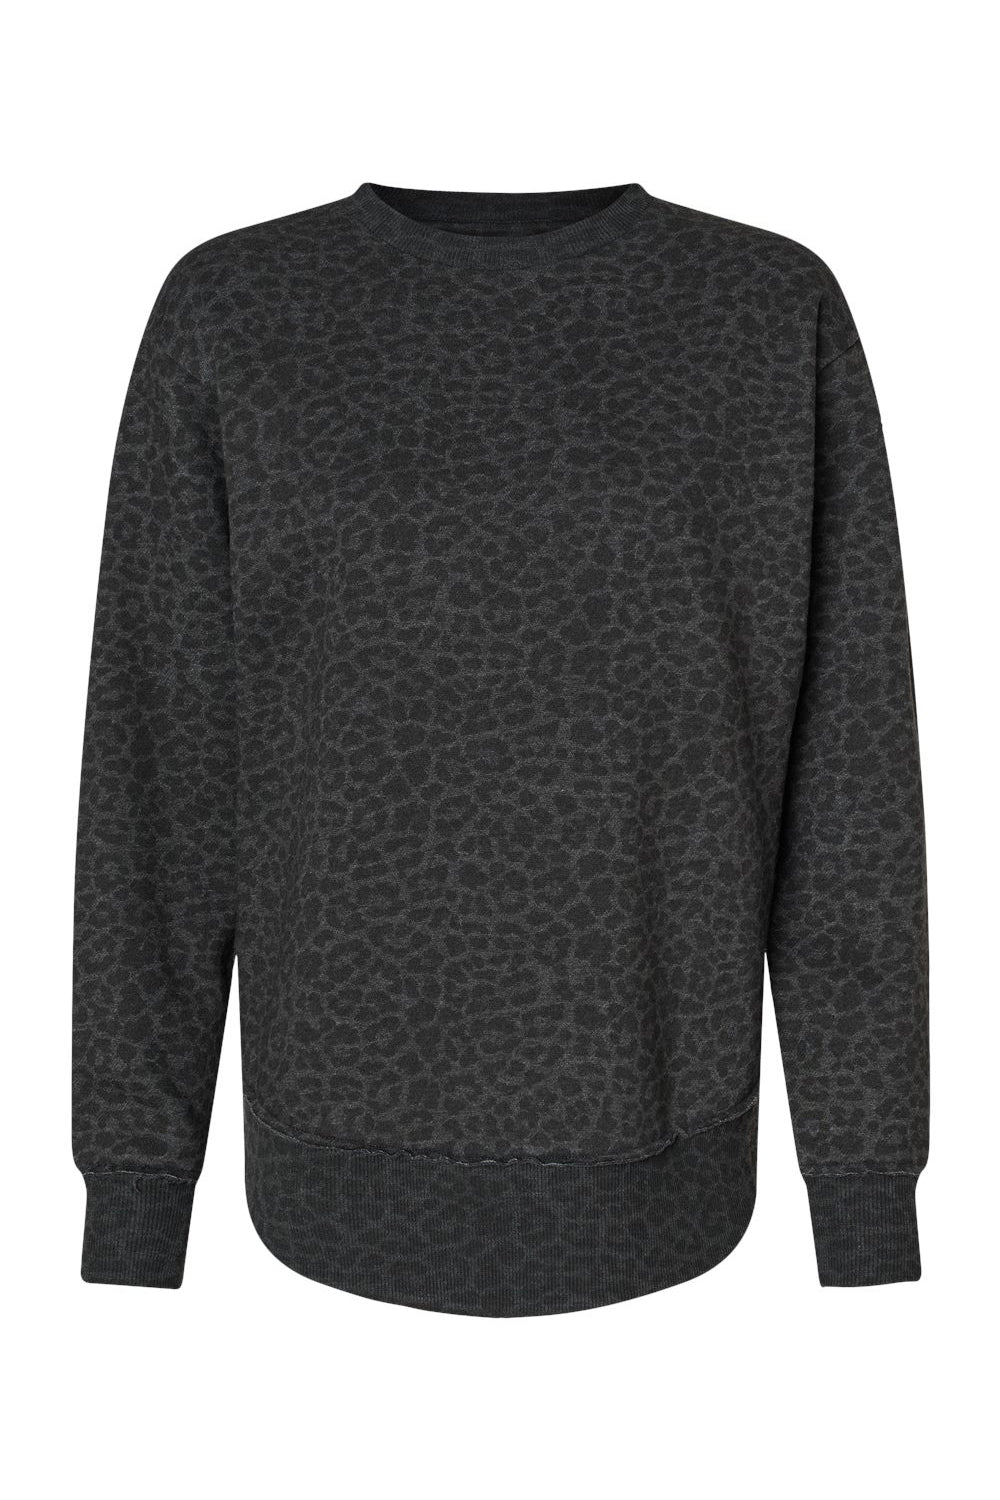 LAT 3525 Womens Weekend Fleece Crewneck Sweatshirt Black Leopard Flat Front